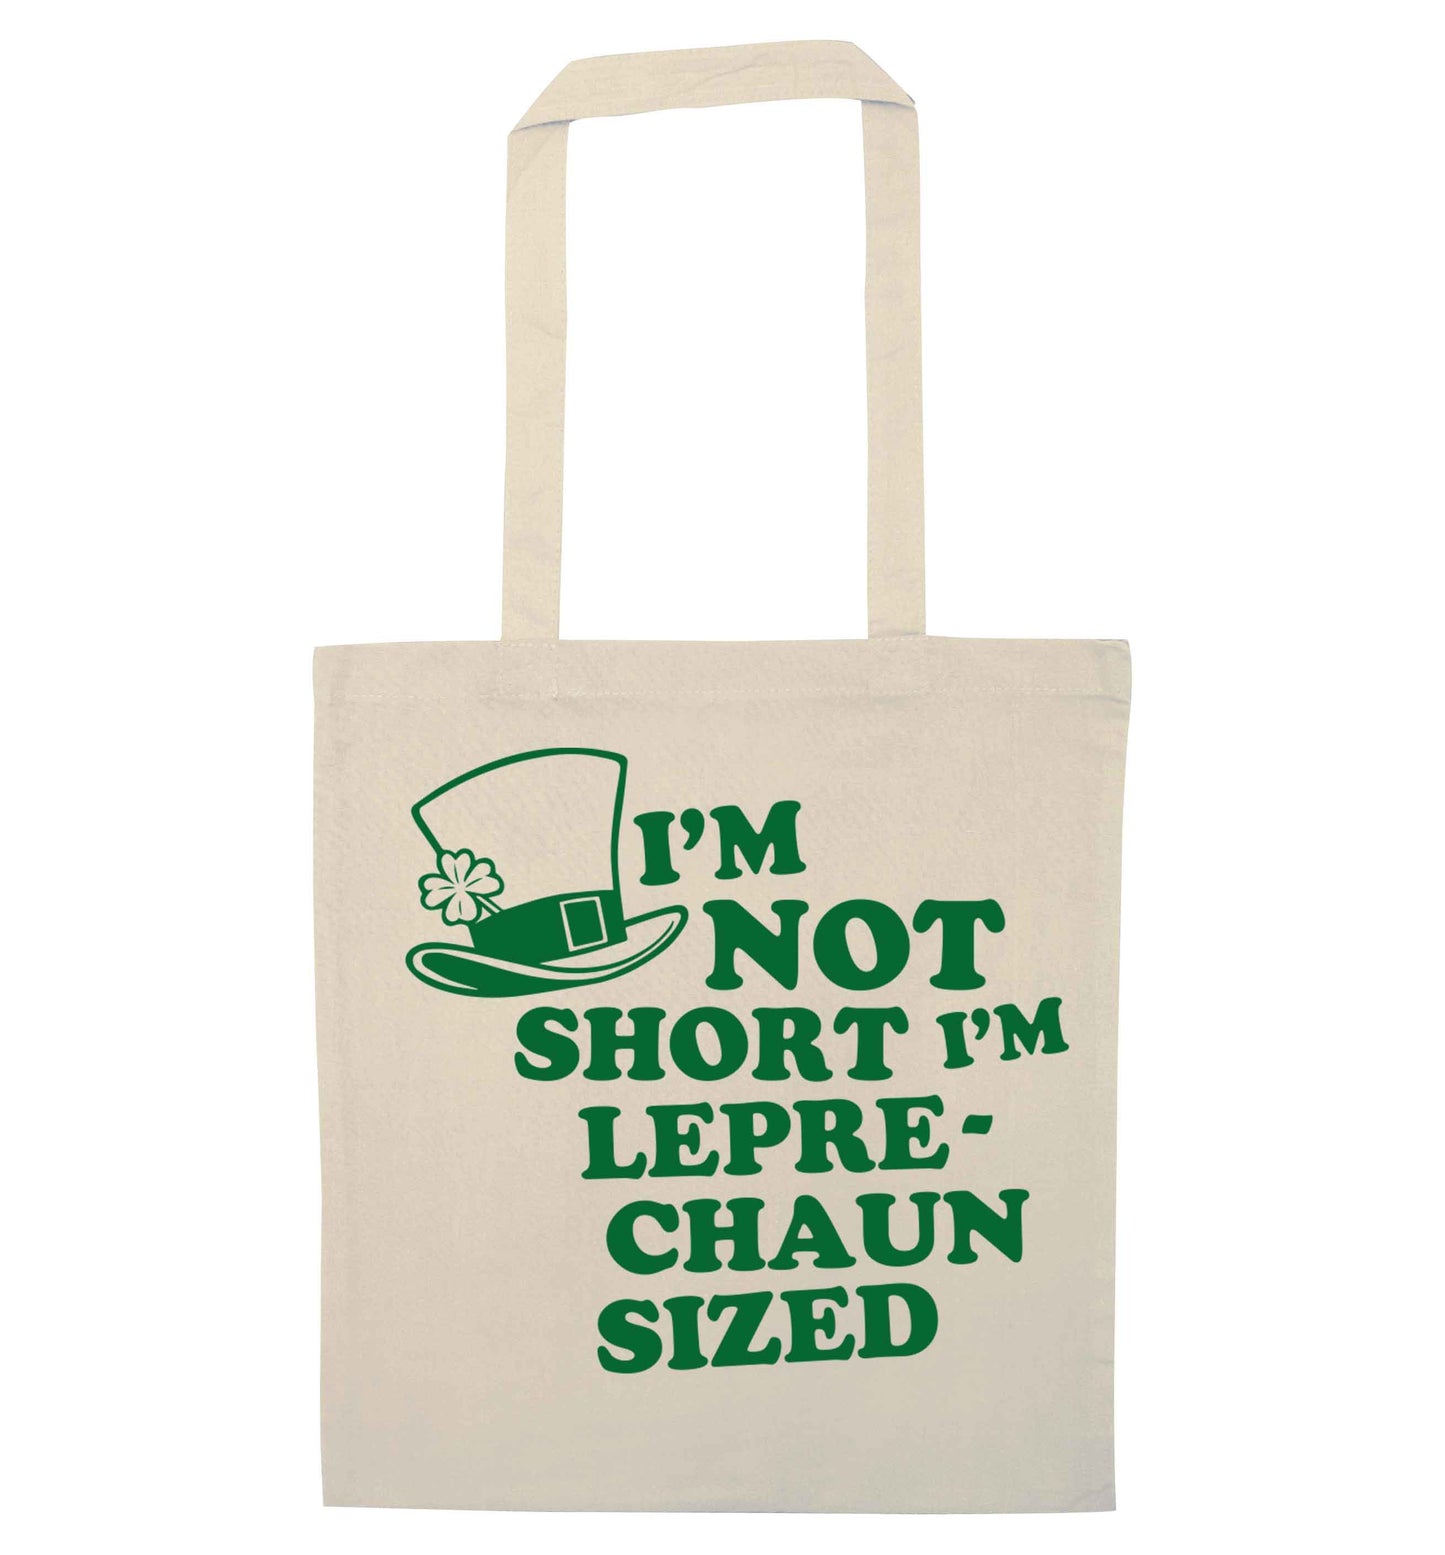 I'm not short I'm leprechaun sized natural tote bag